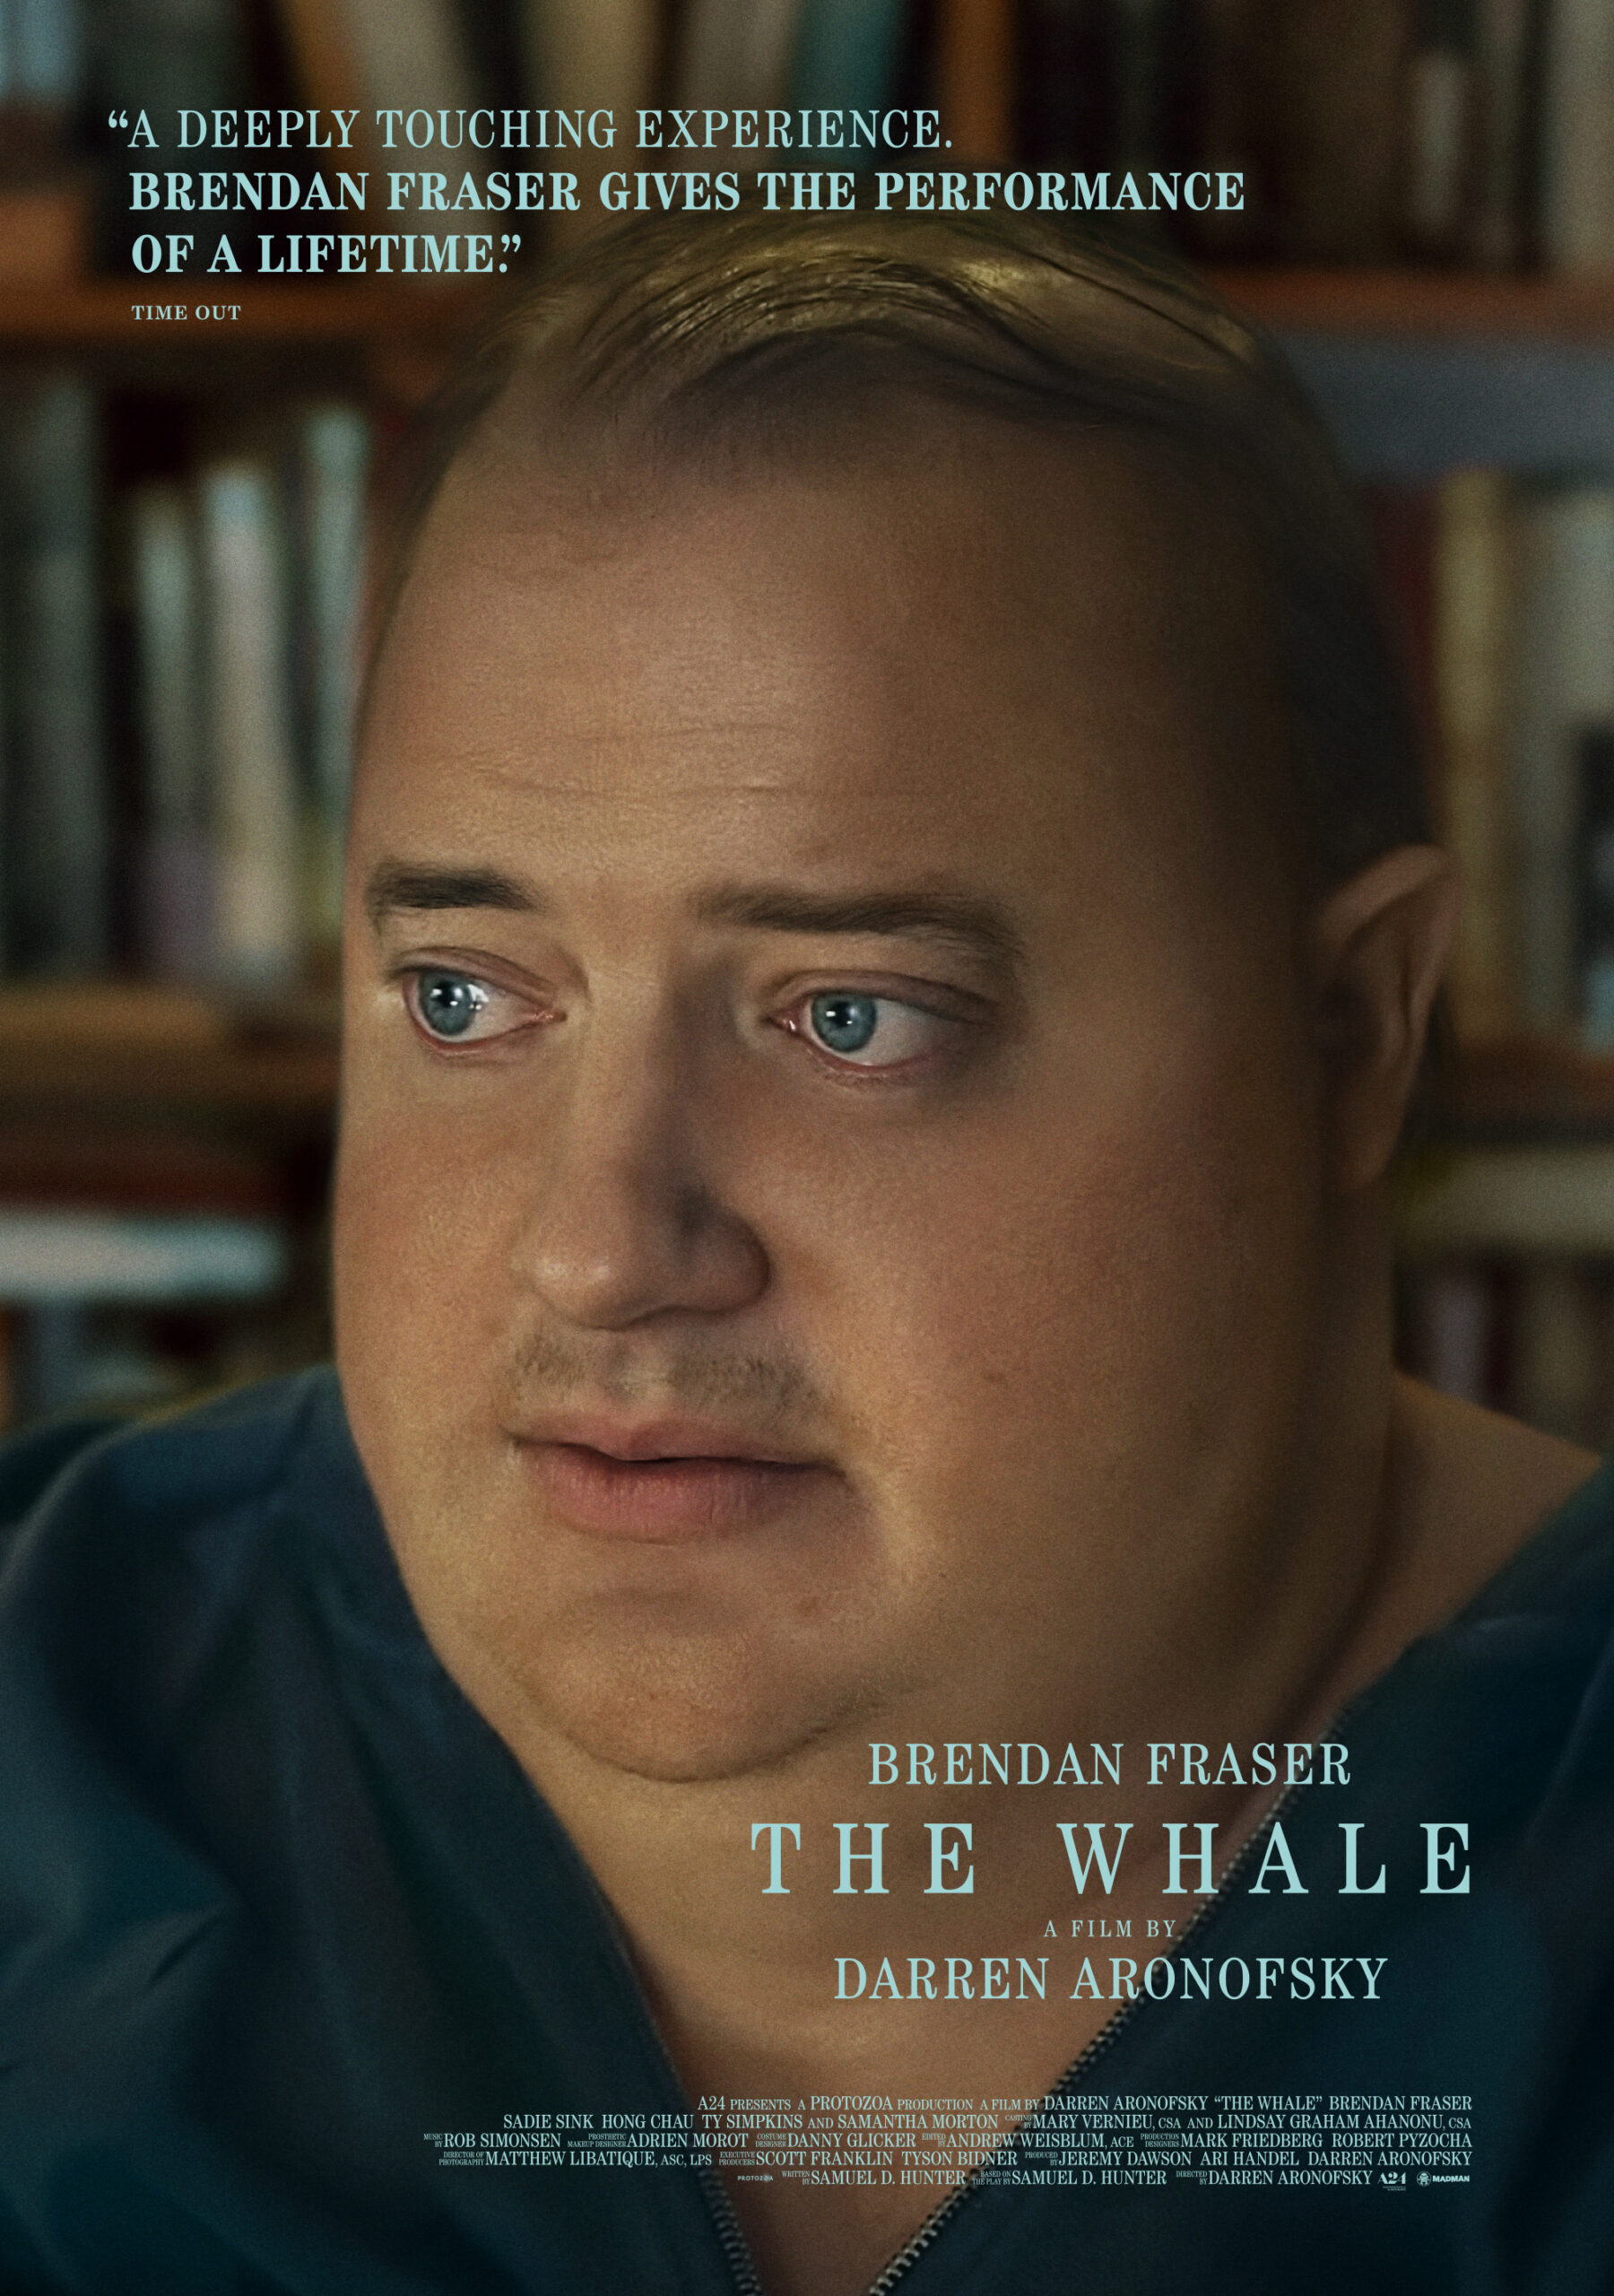 Brendan Fraser in The Whale poster